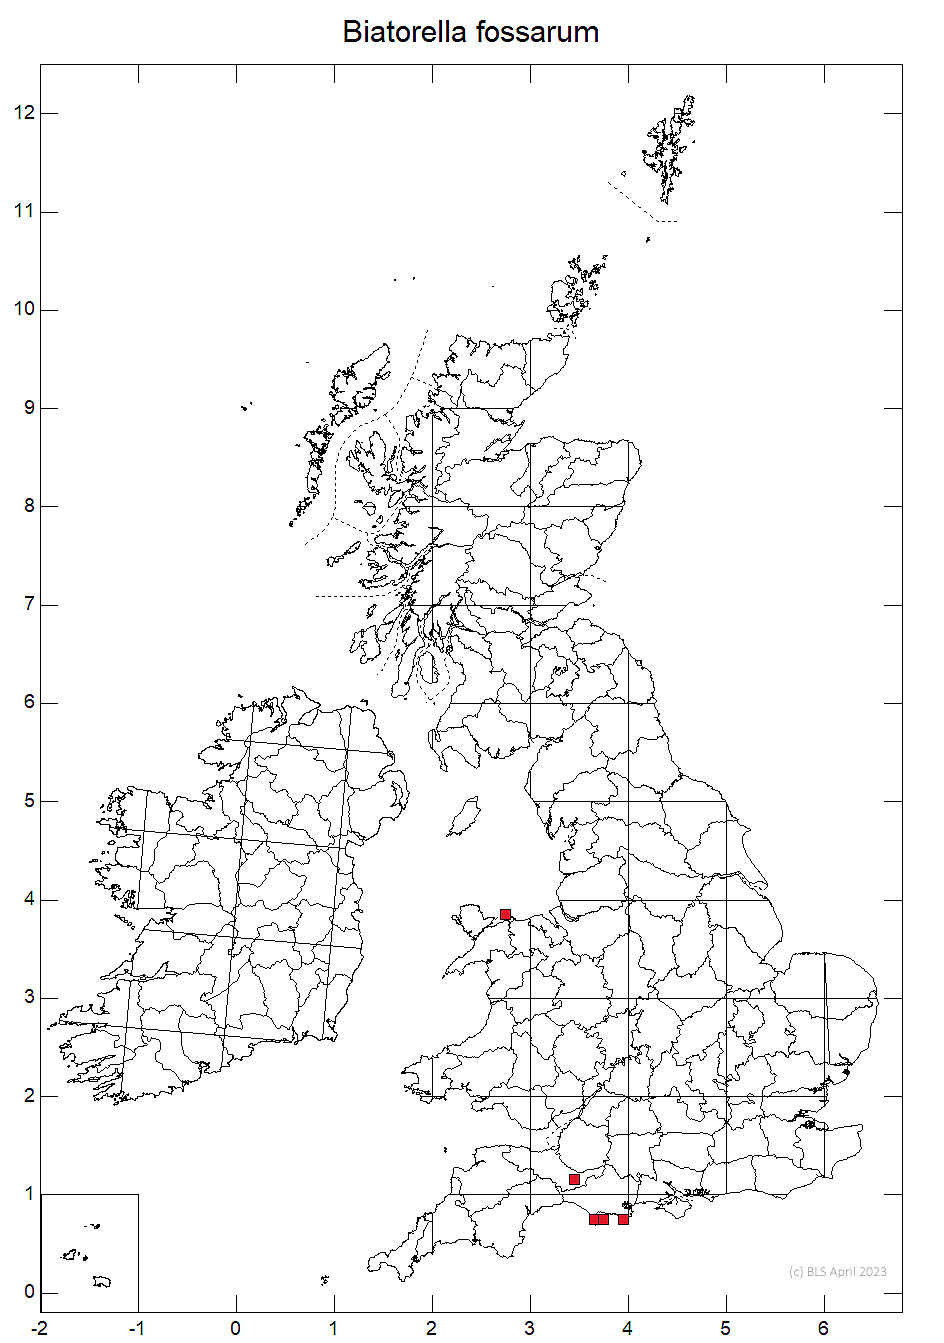 Biatorella fossarum 10km sq distribution map